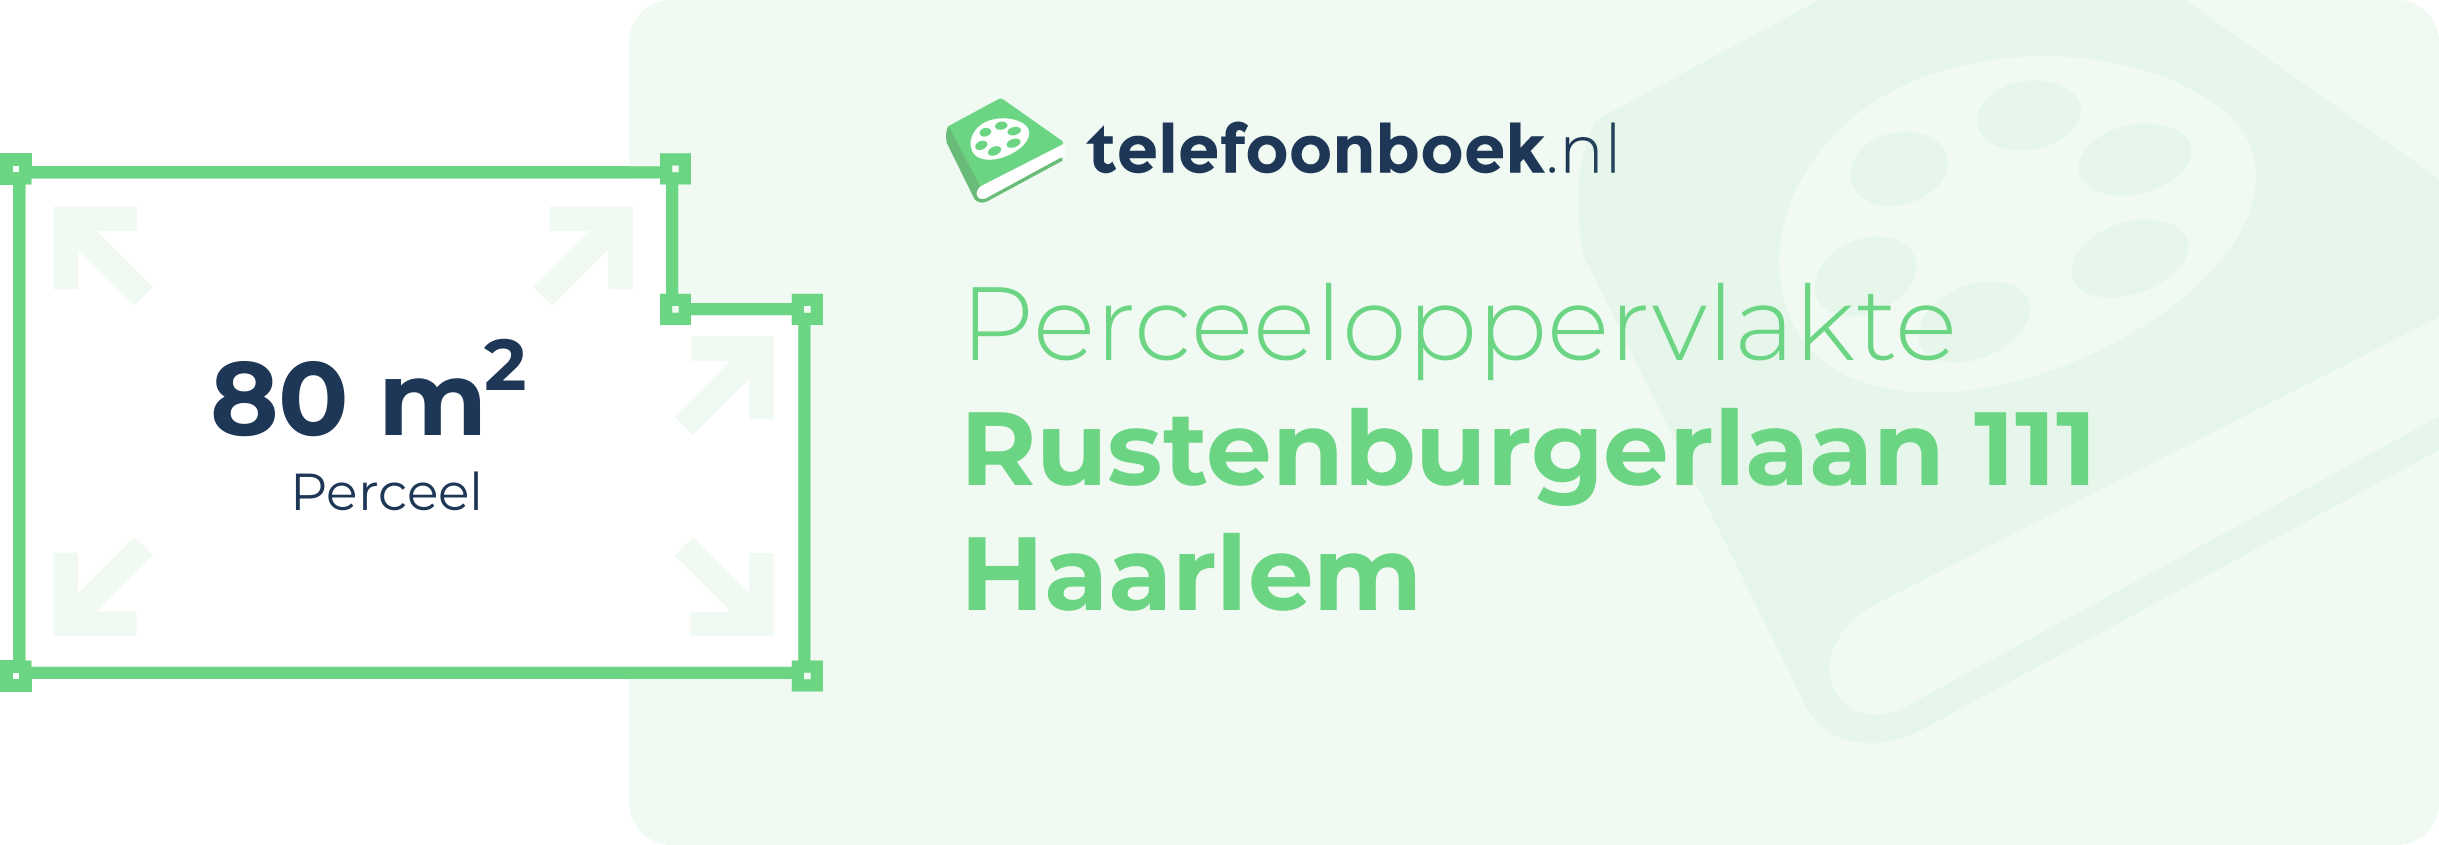 Perceeloppervlakte Rustenburgerlaan 111 Haarlem